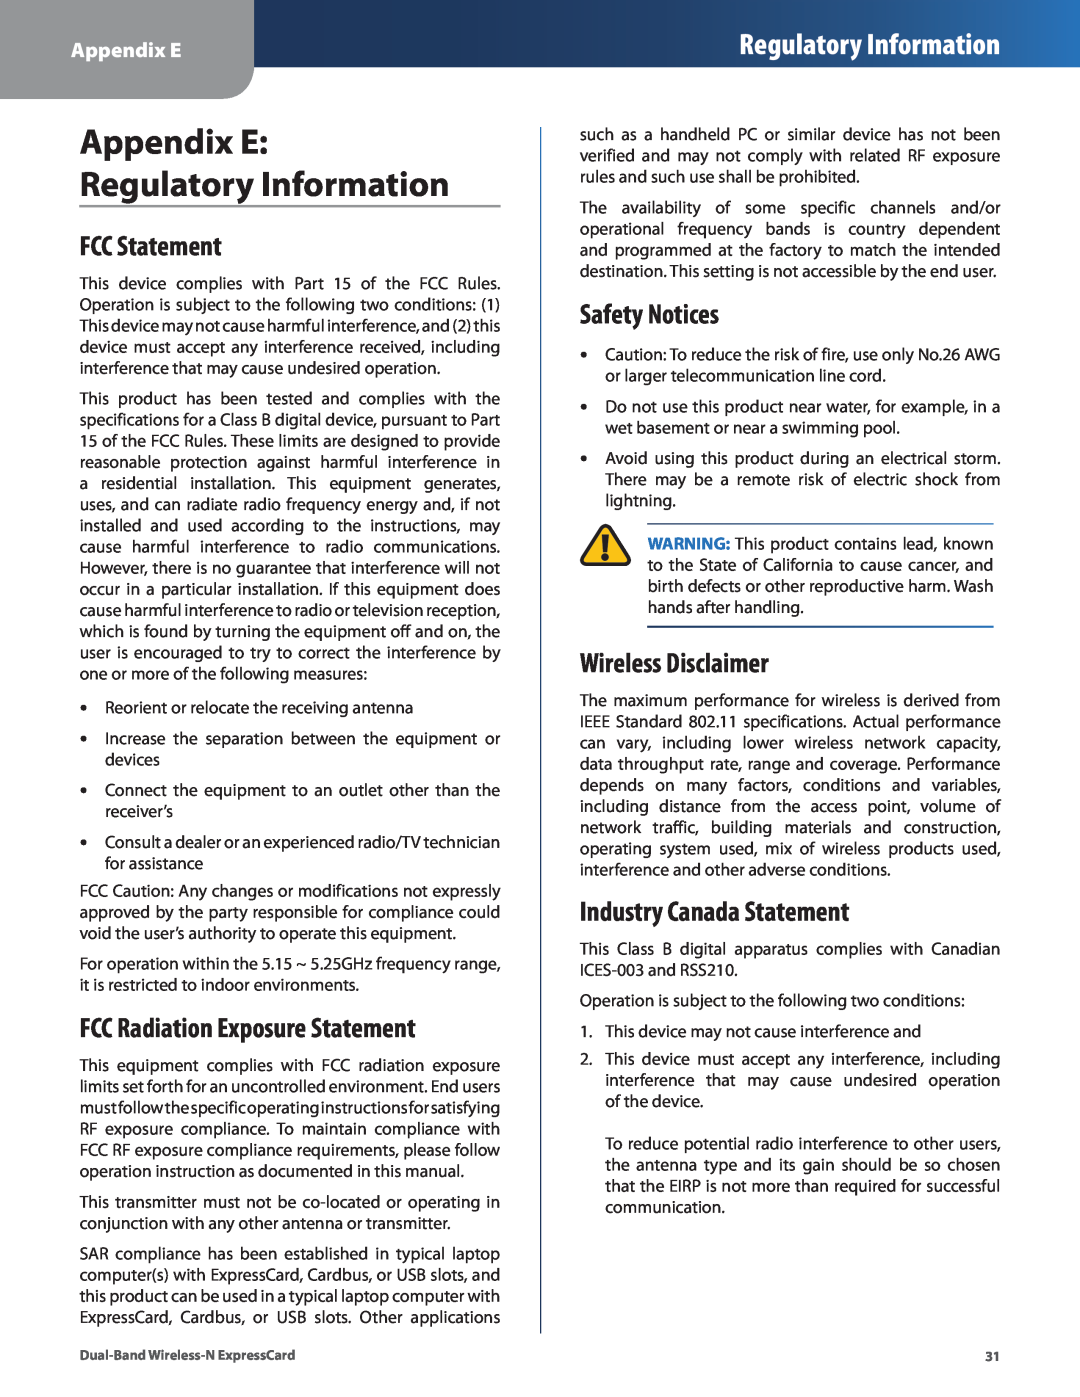 Cisco Systems WEC600N Appendix E Regulatory Information, FCC Statement, FCC Radiation Exposure Statement, Safety Notices 